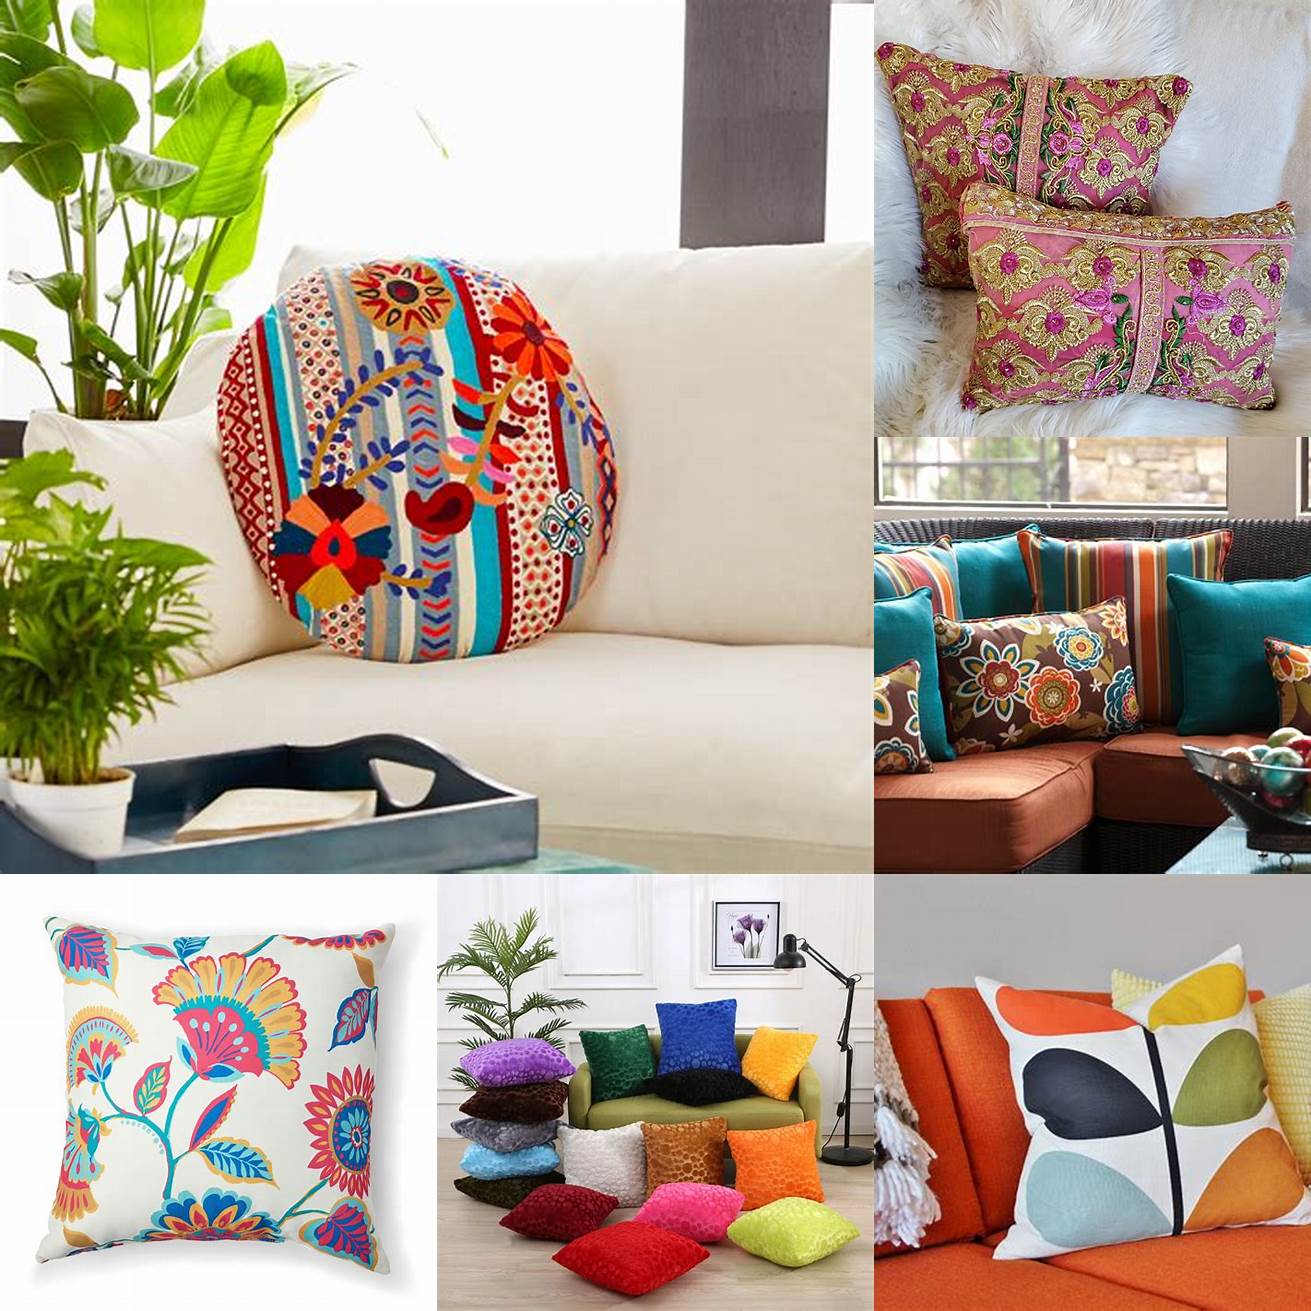 Mini Sofa with colorful throw pillows